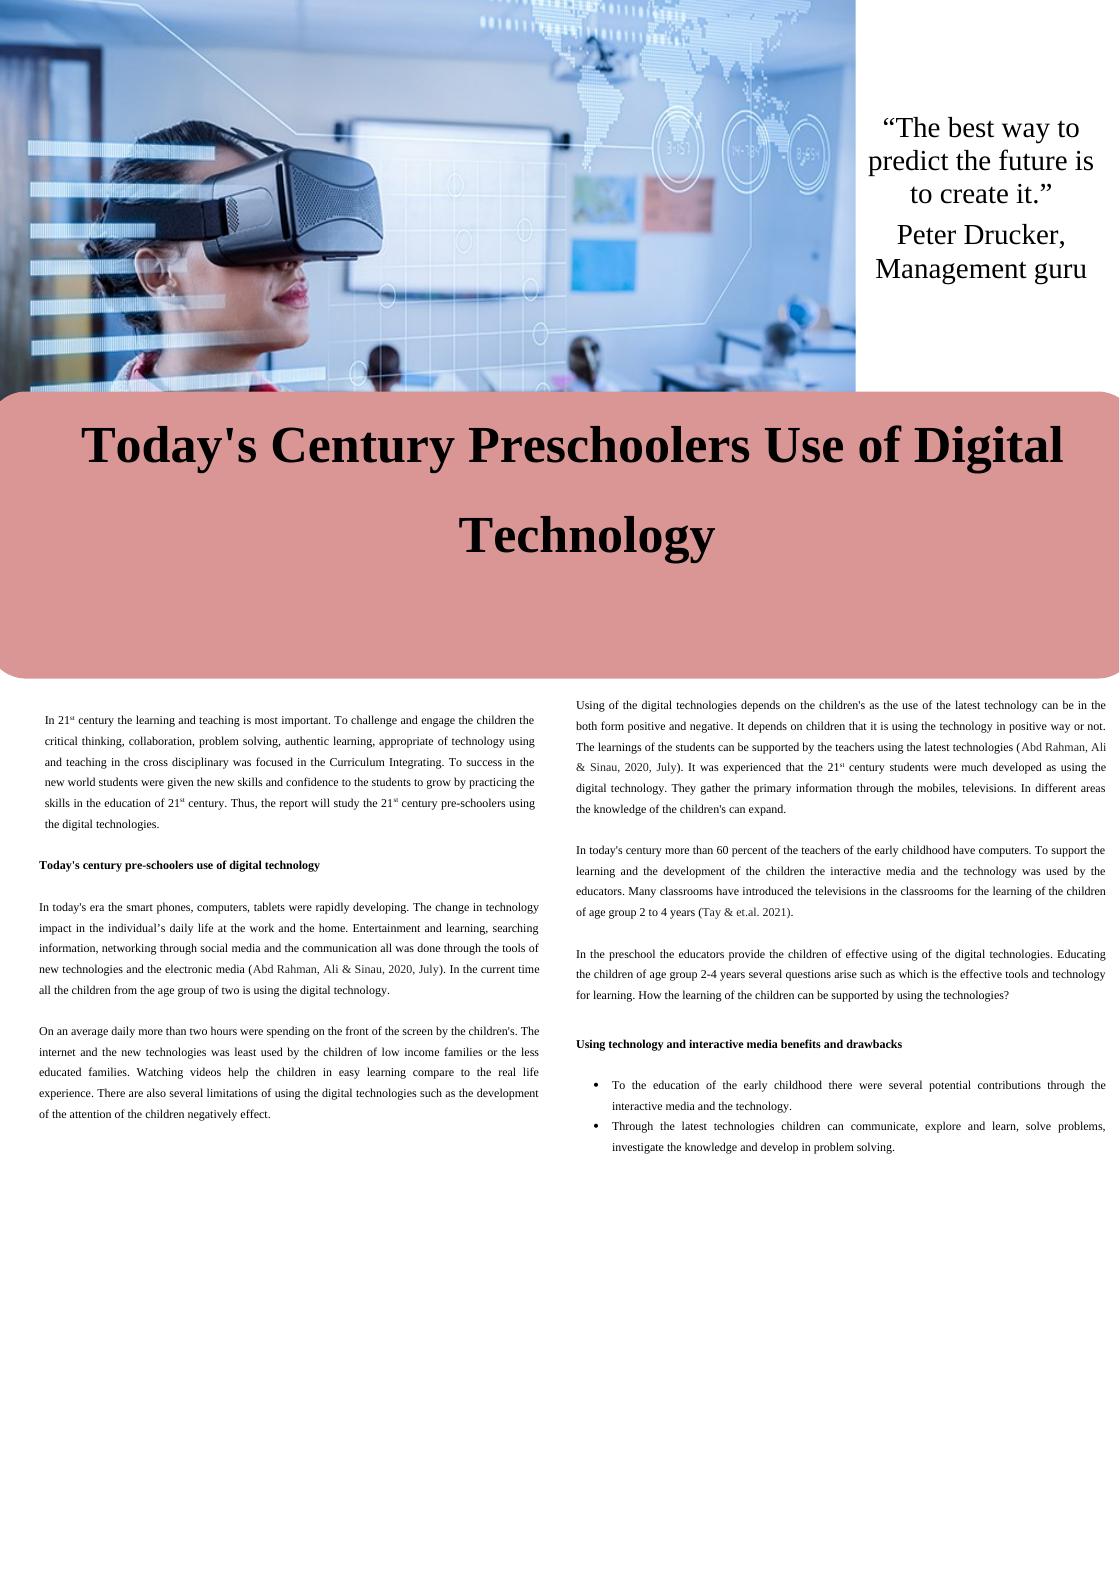 Today's Century Preschoolers Use of Digital Technology_1